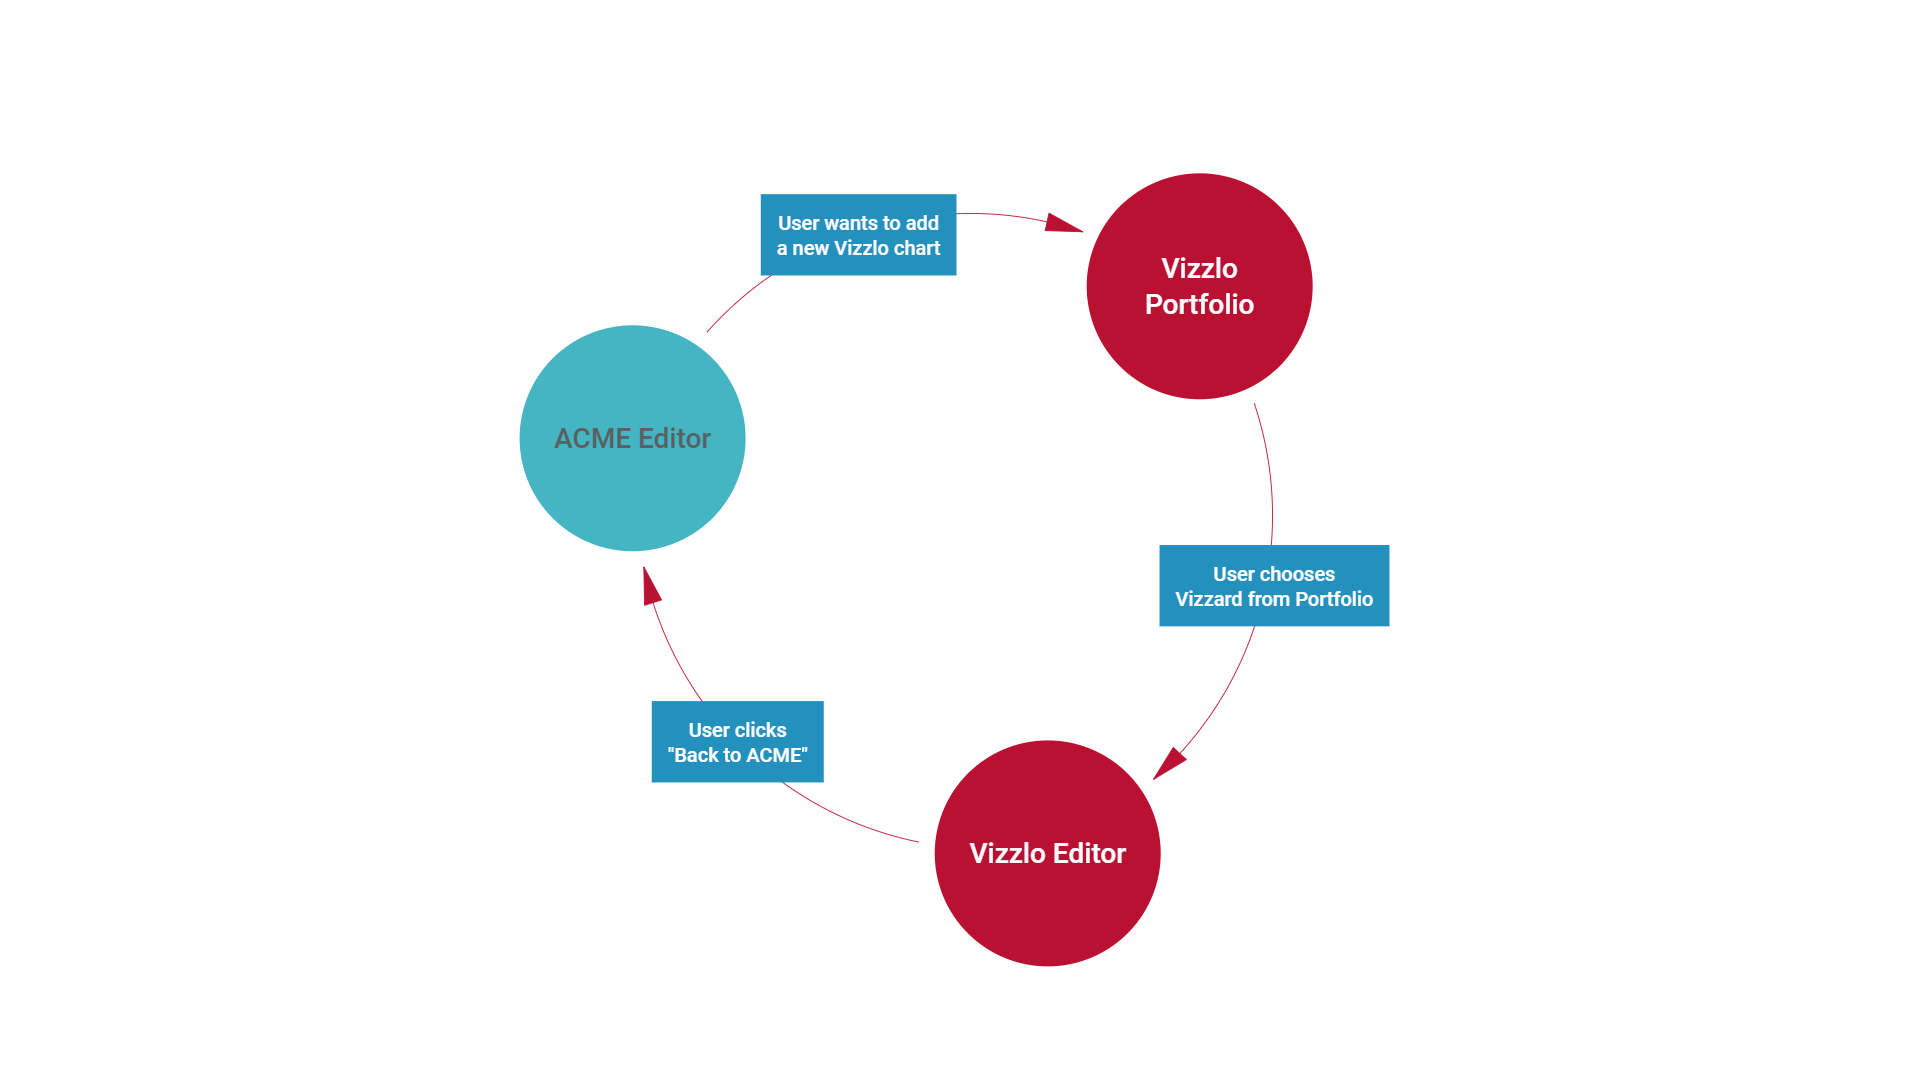 User Flow: Keeping the user in the loop between ACME and Vizzlo editors